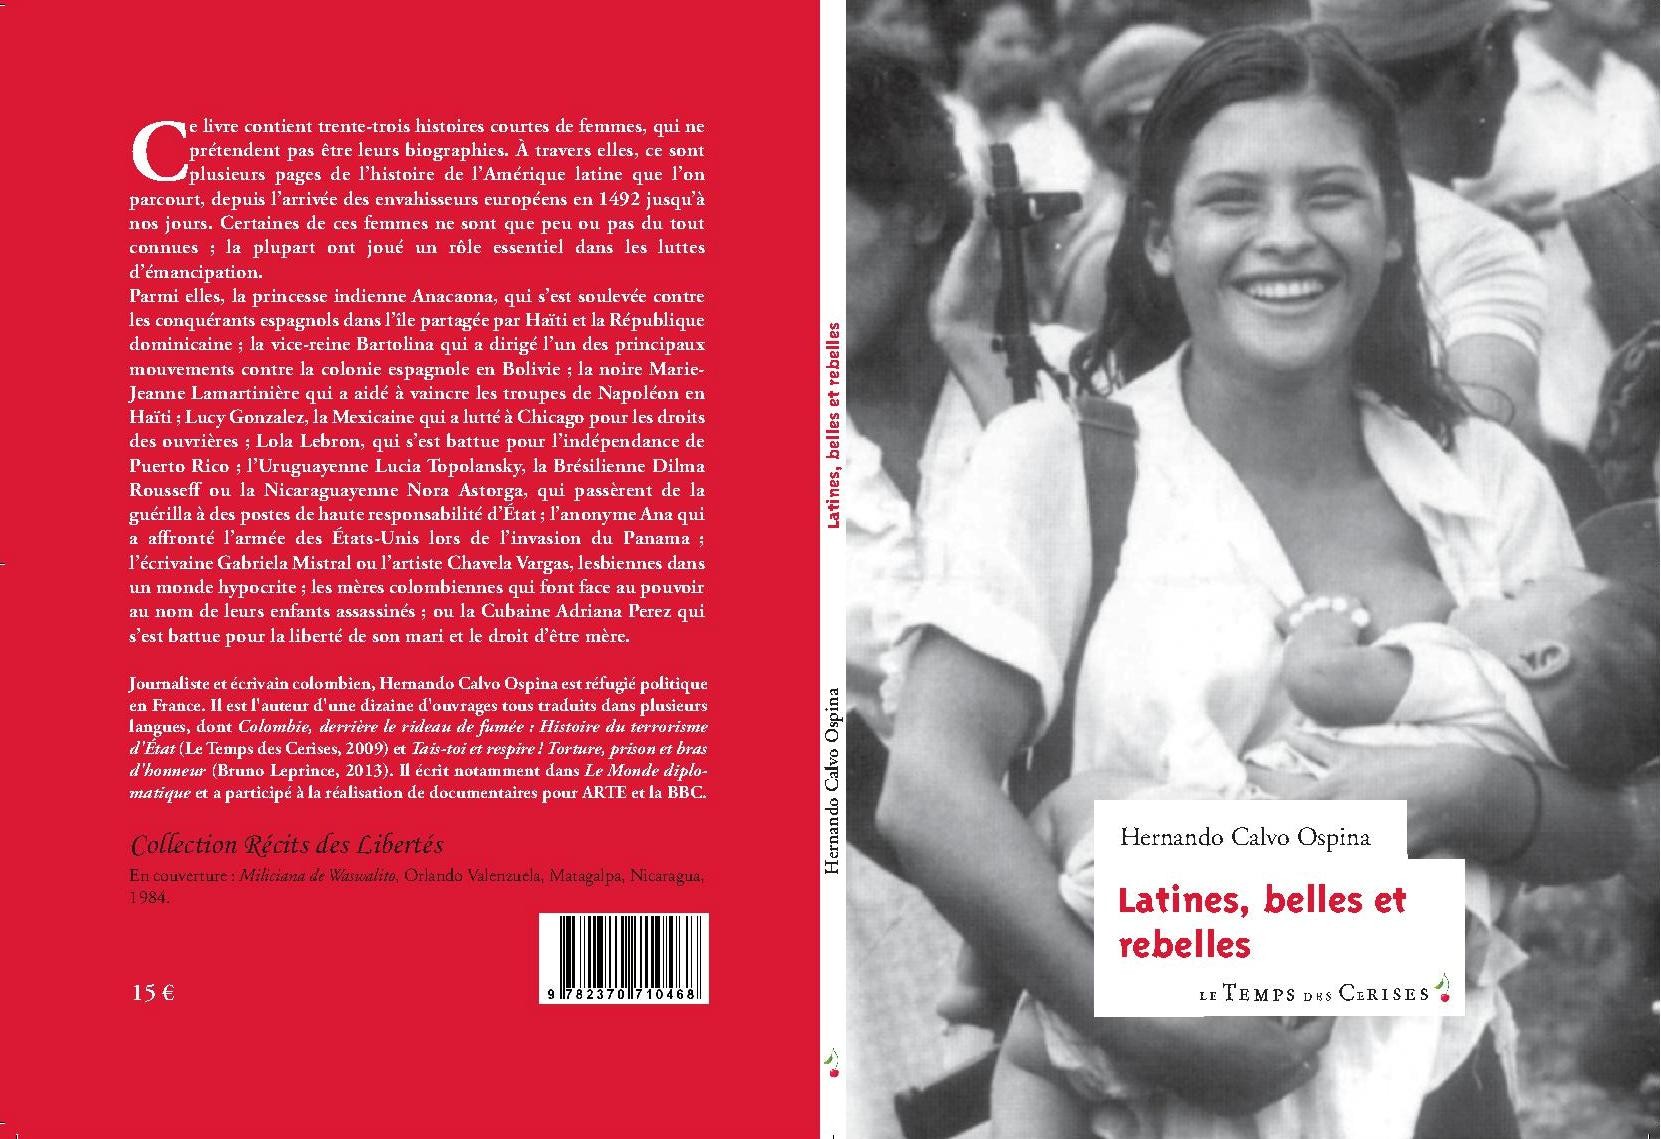 Latines, belles et rebelles, le nouveau livre de Hernando Calvo Ospina